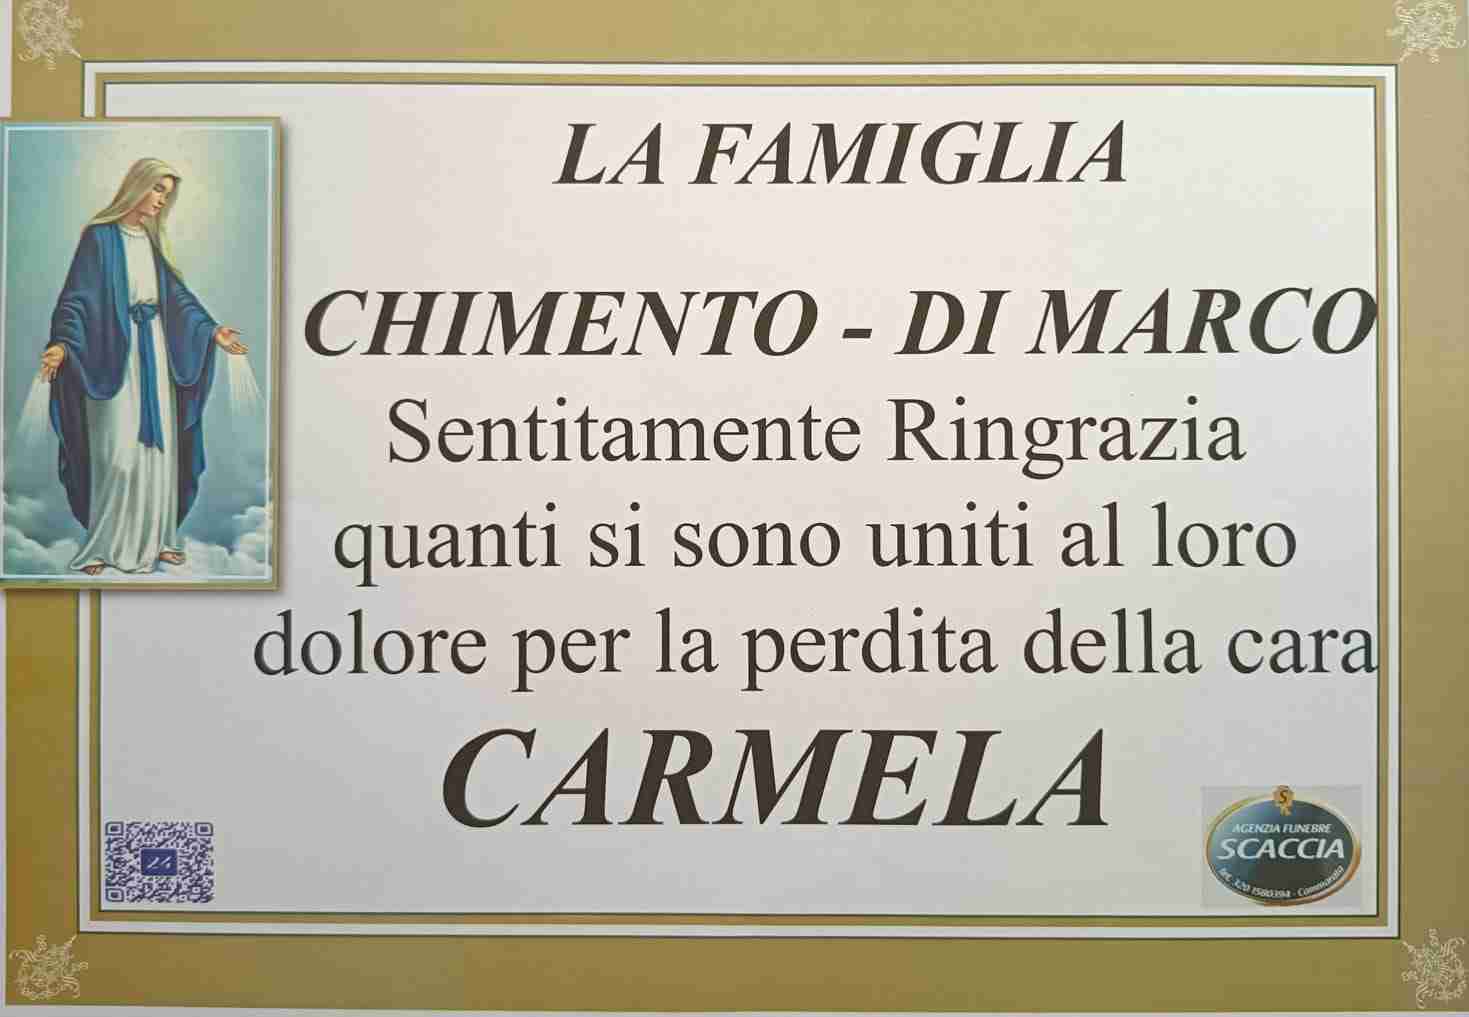 Carmela Chimento